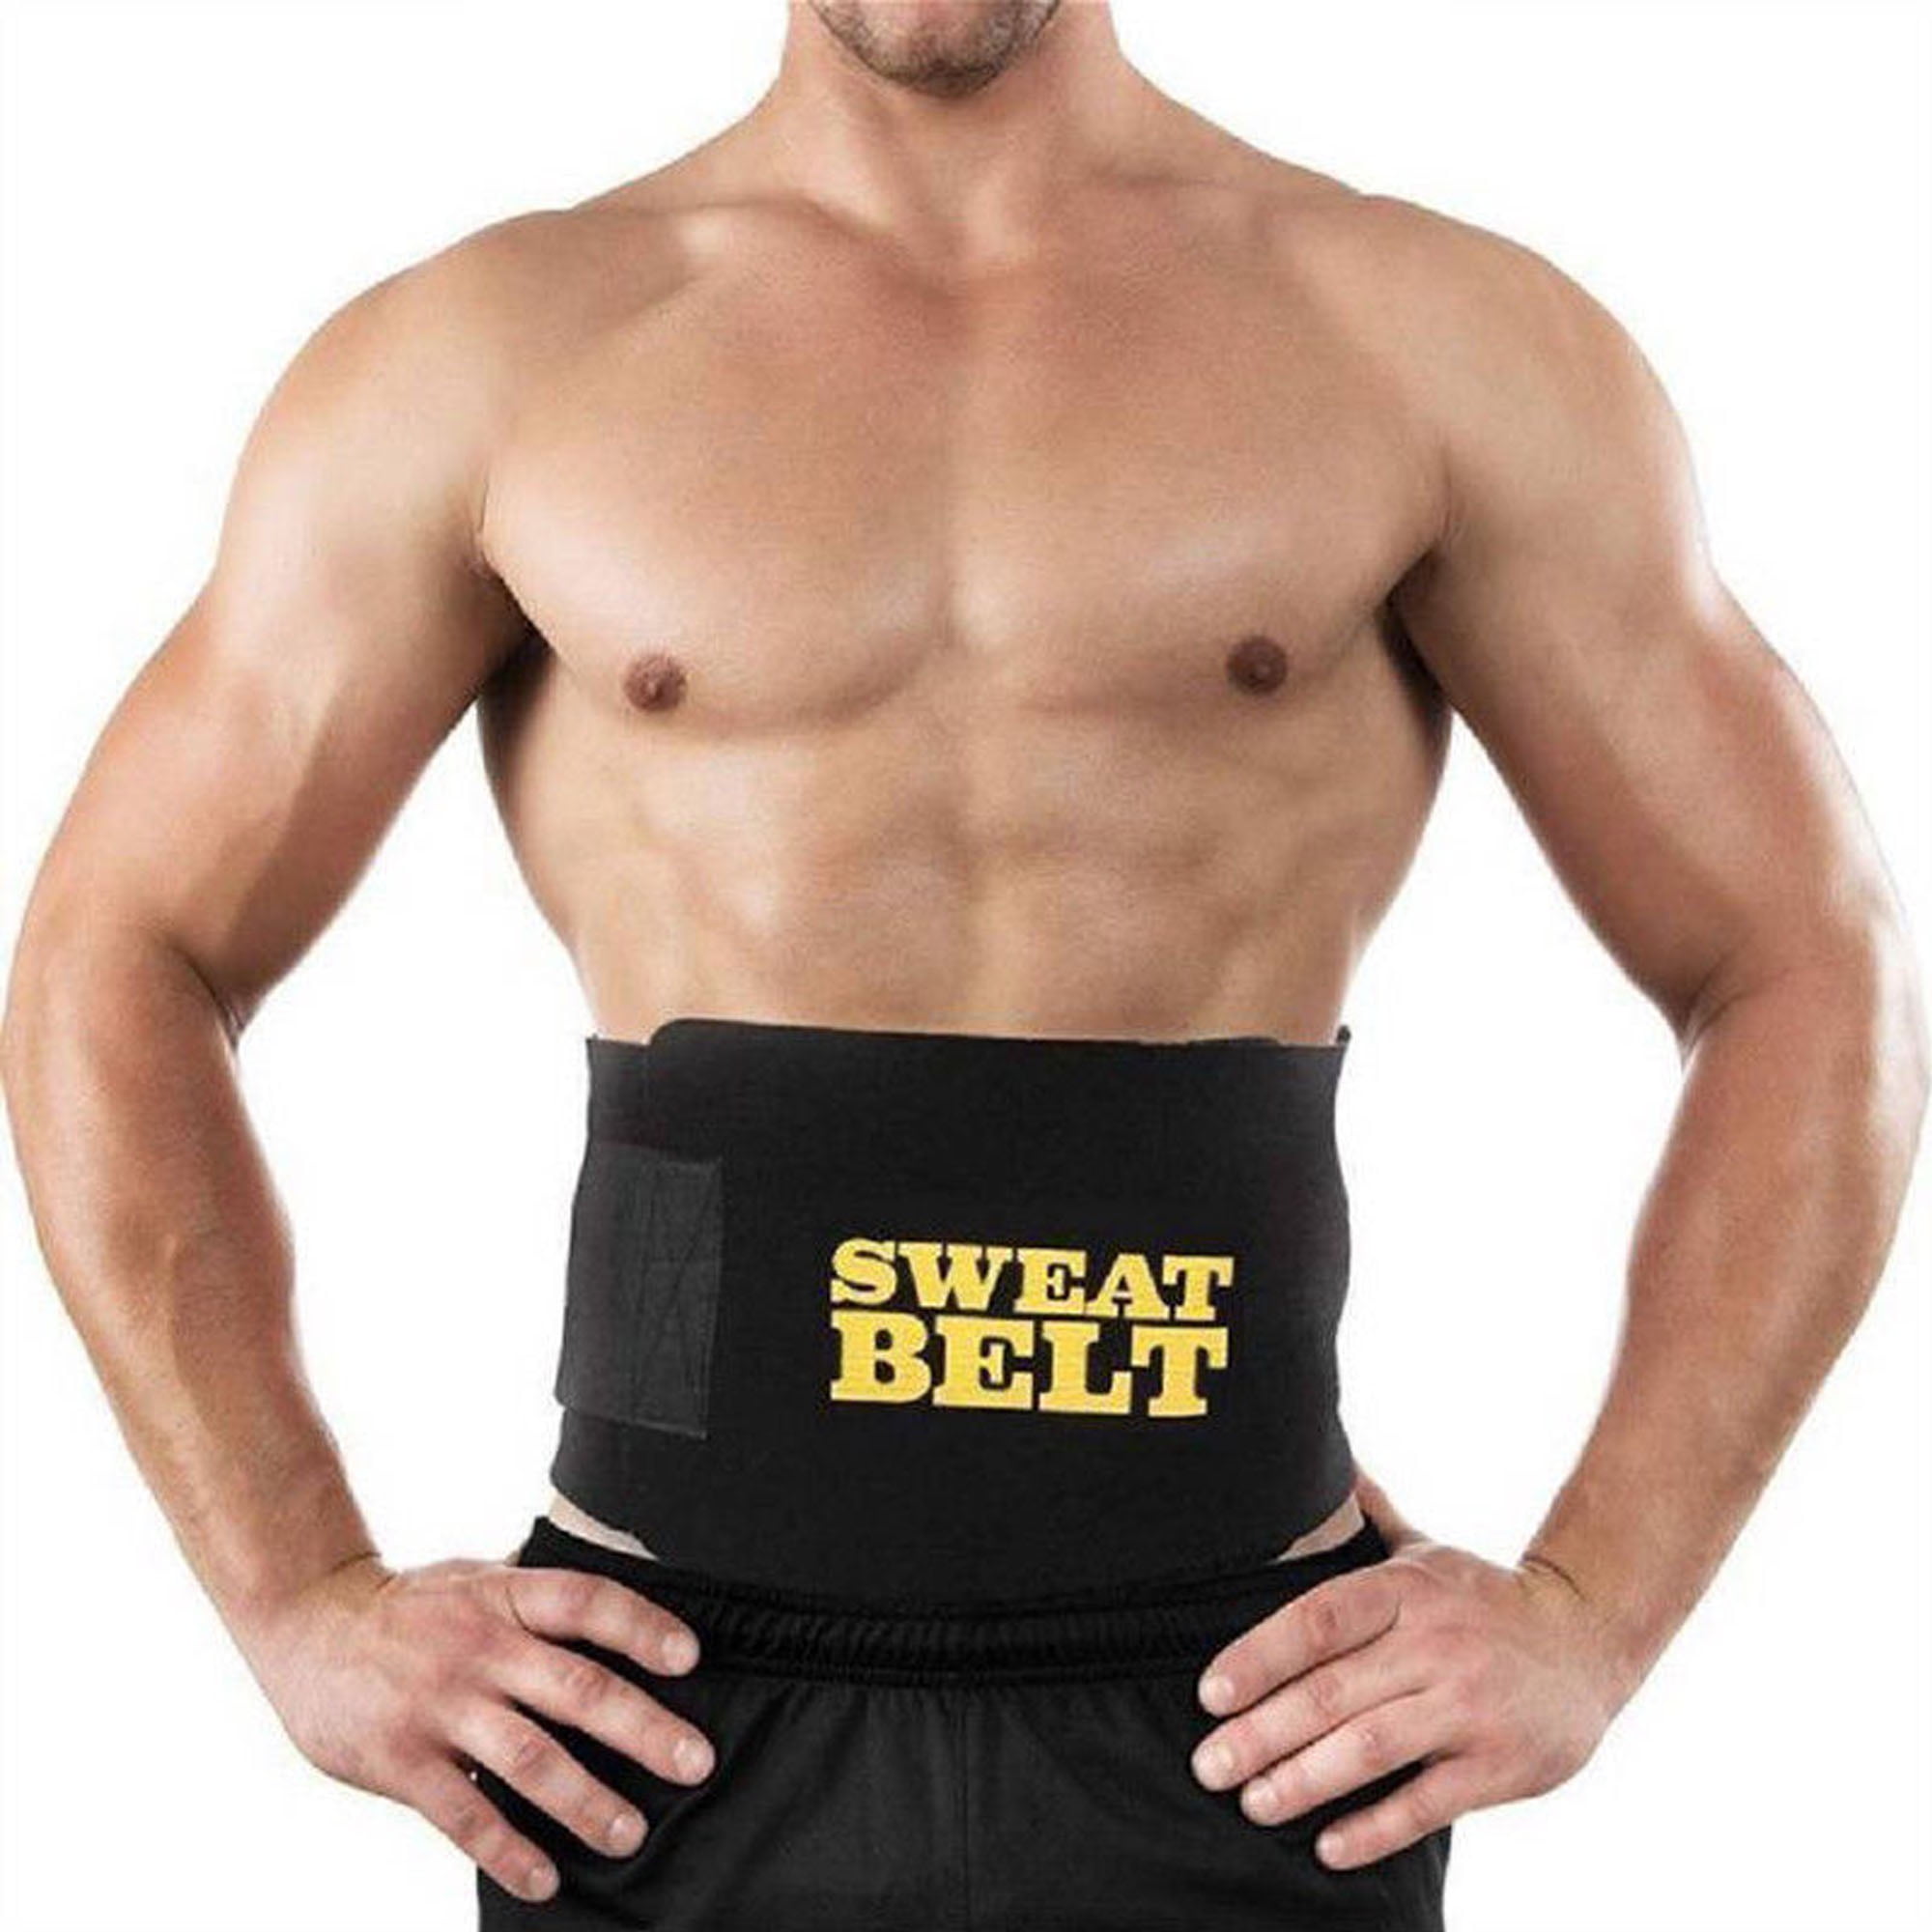 Waist Trimmer Exercise Wrap Belt Slimming Burn Fat Sweat Body Shaper Weight Loss 